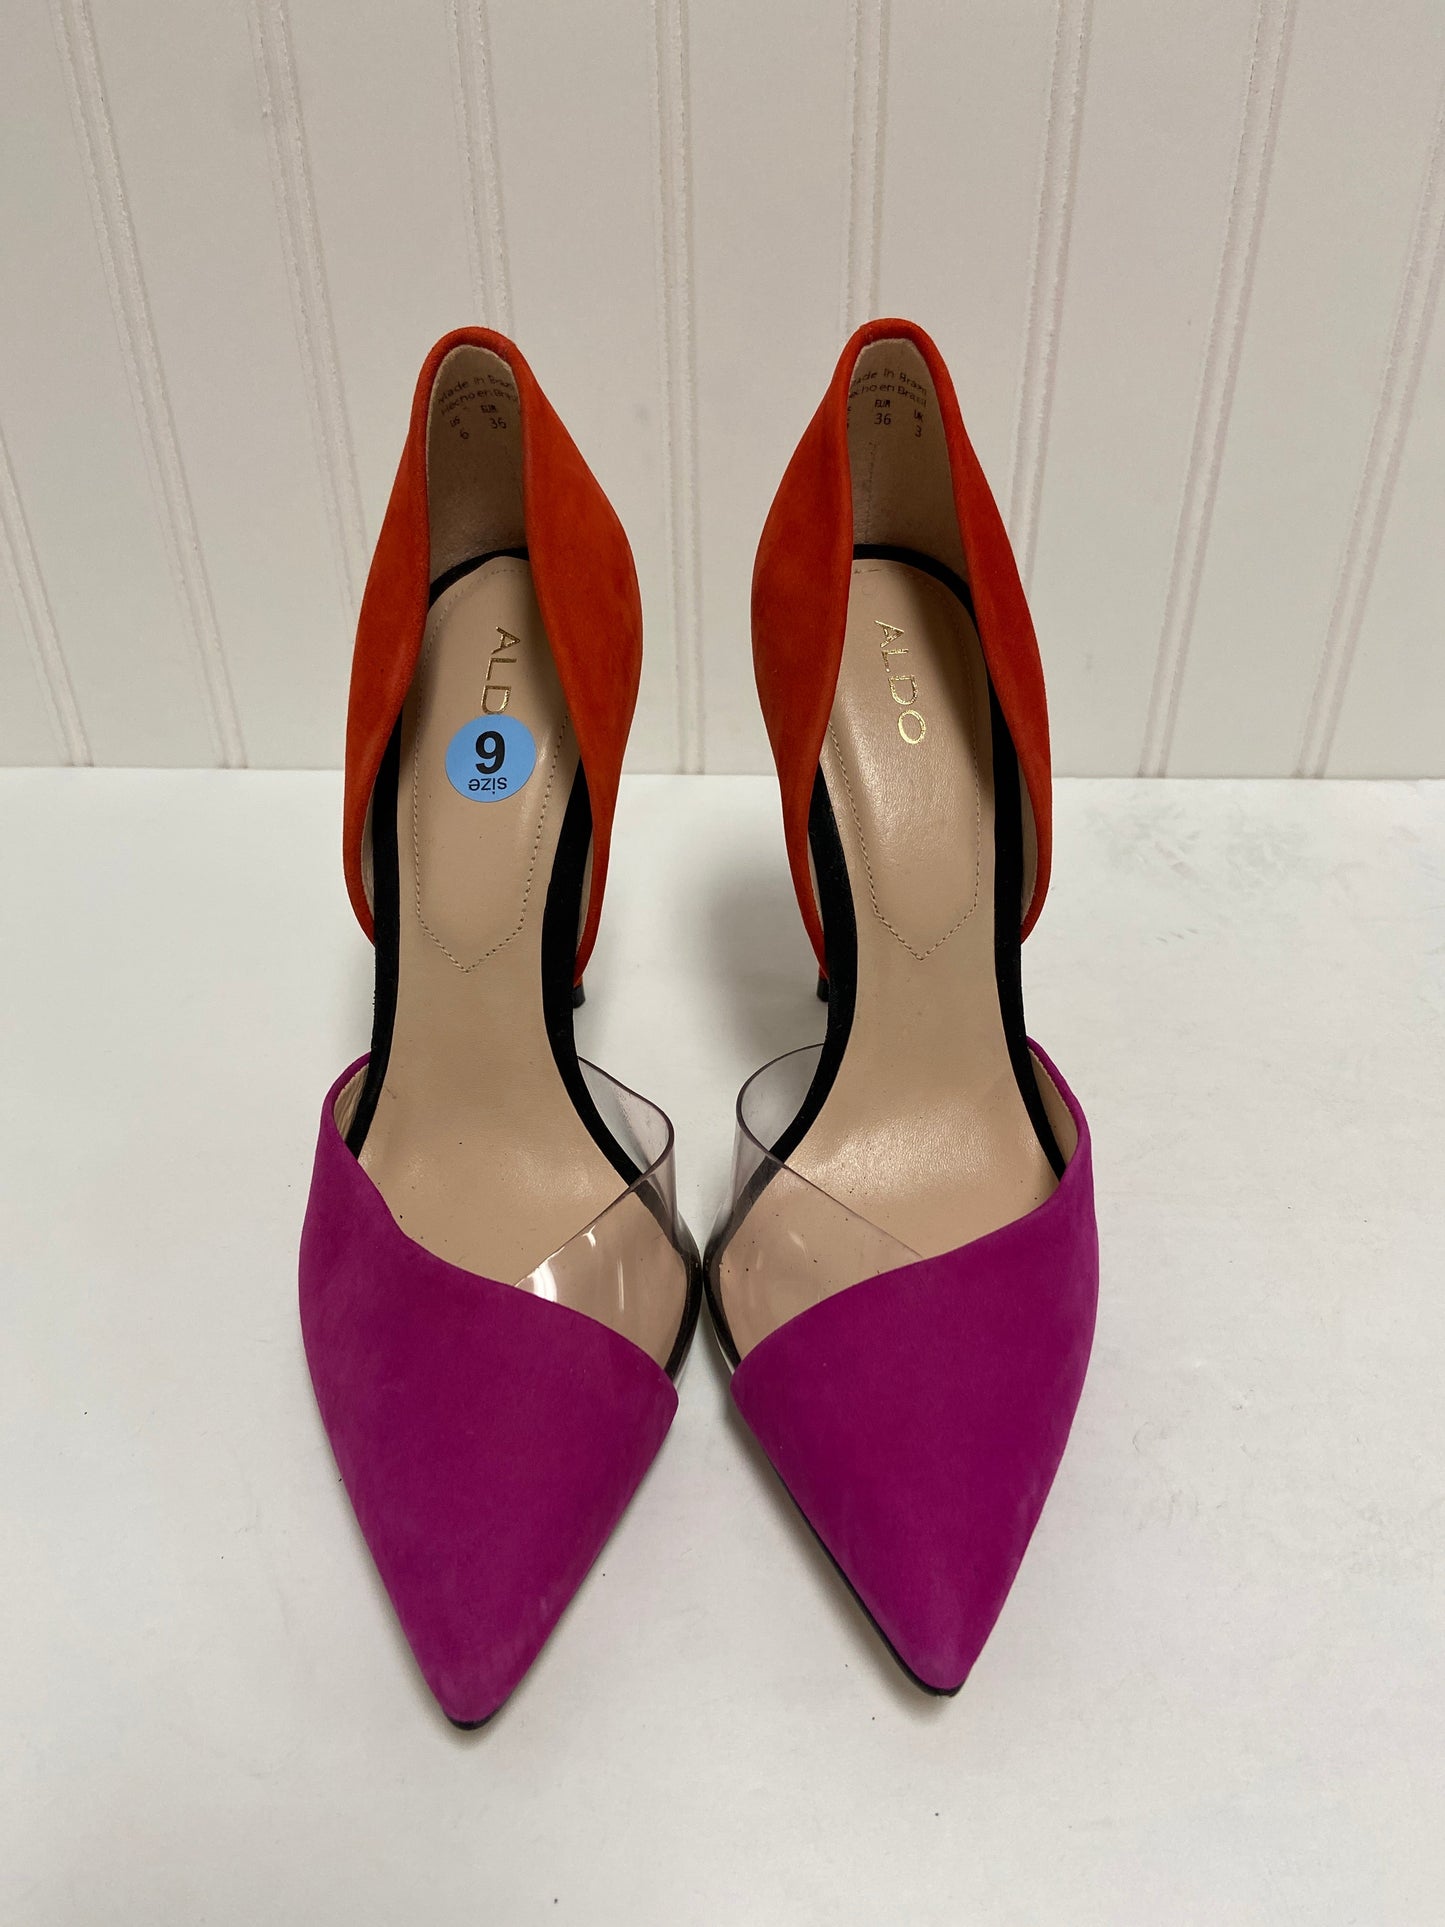 Purple & Red Shoes Heels Stiletto Aldo, Size 6